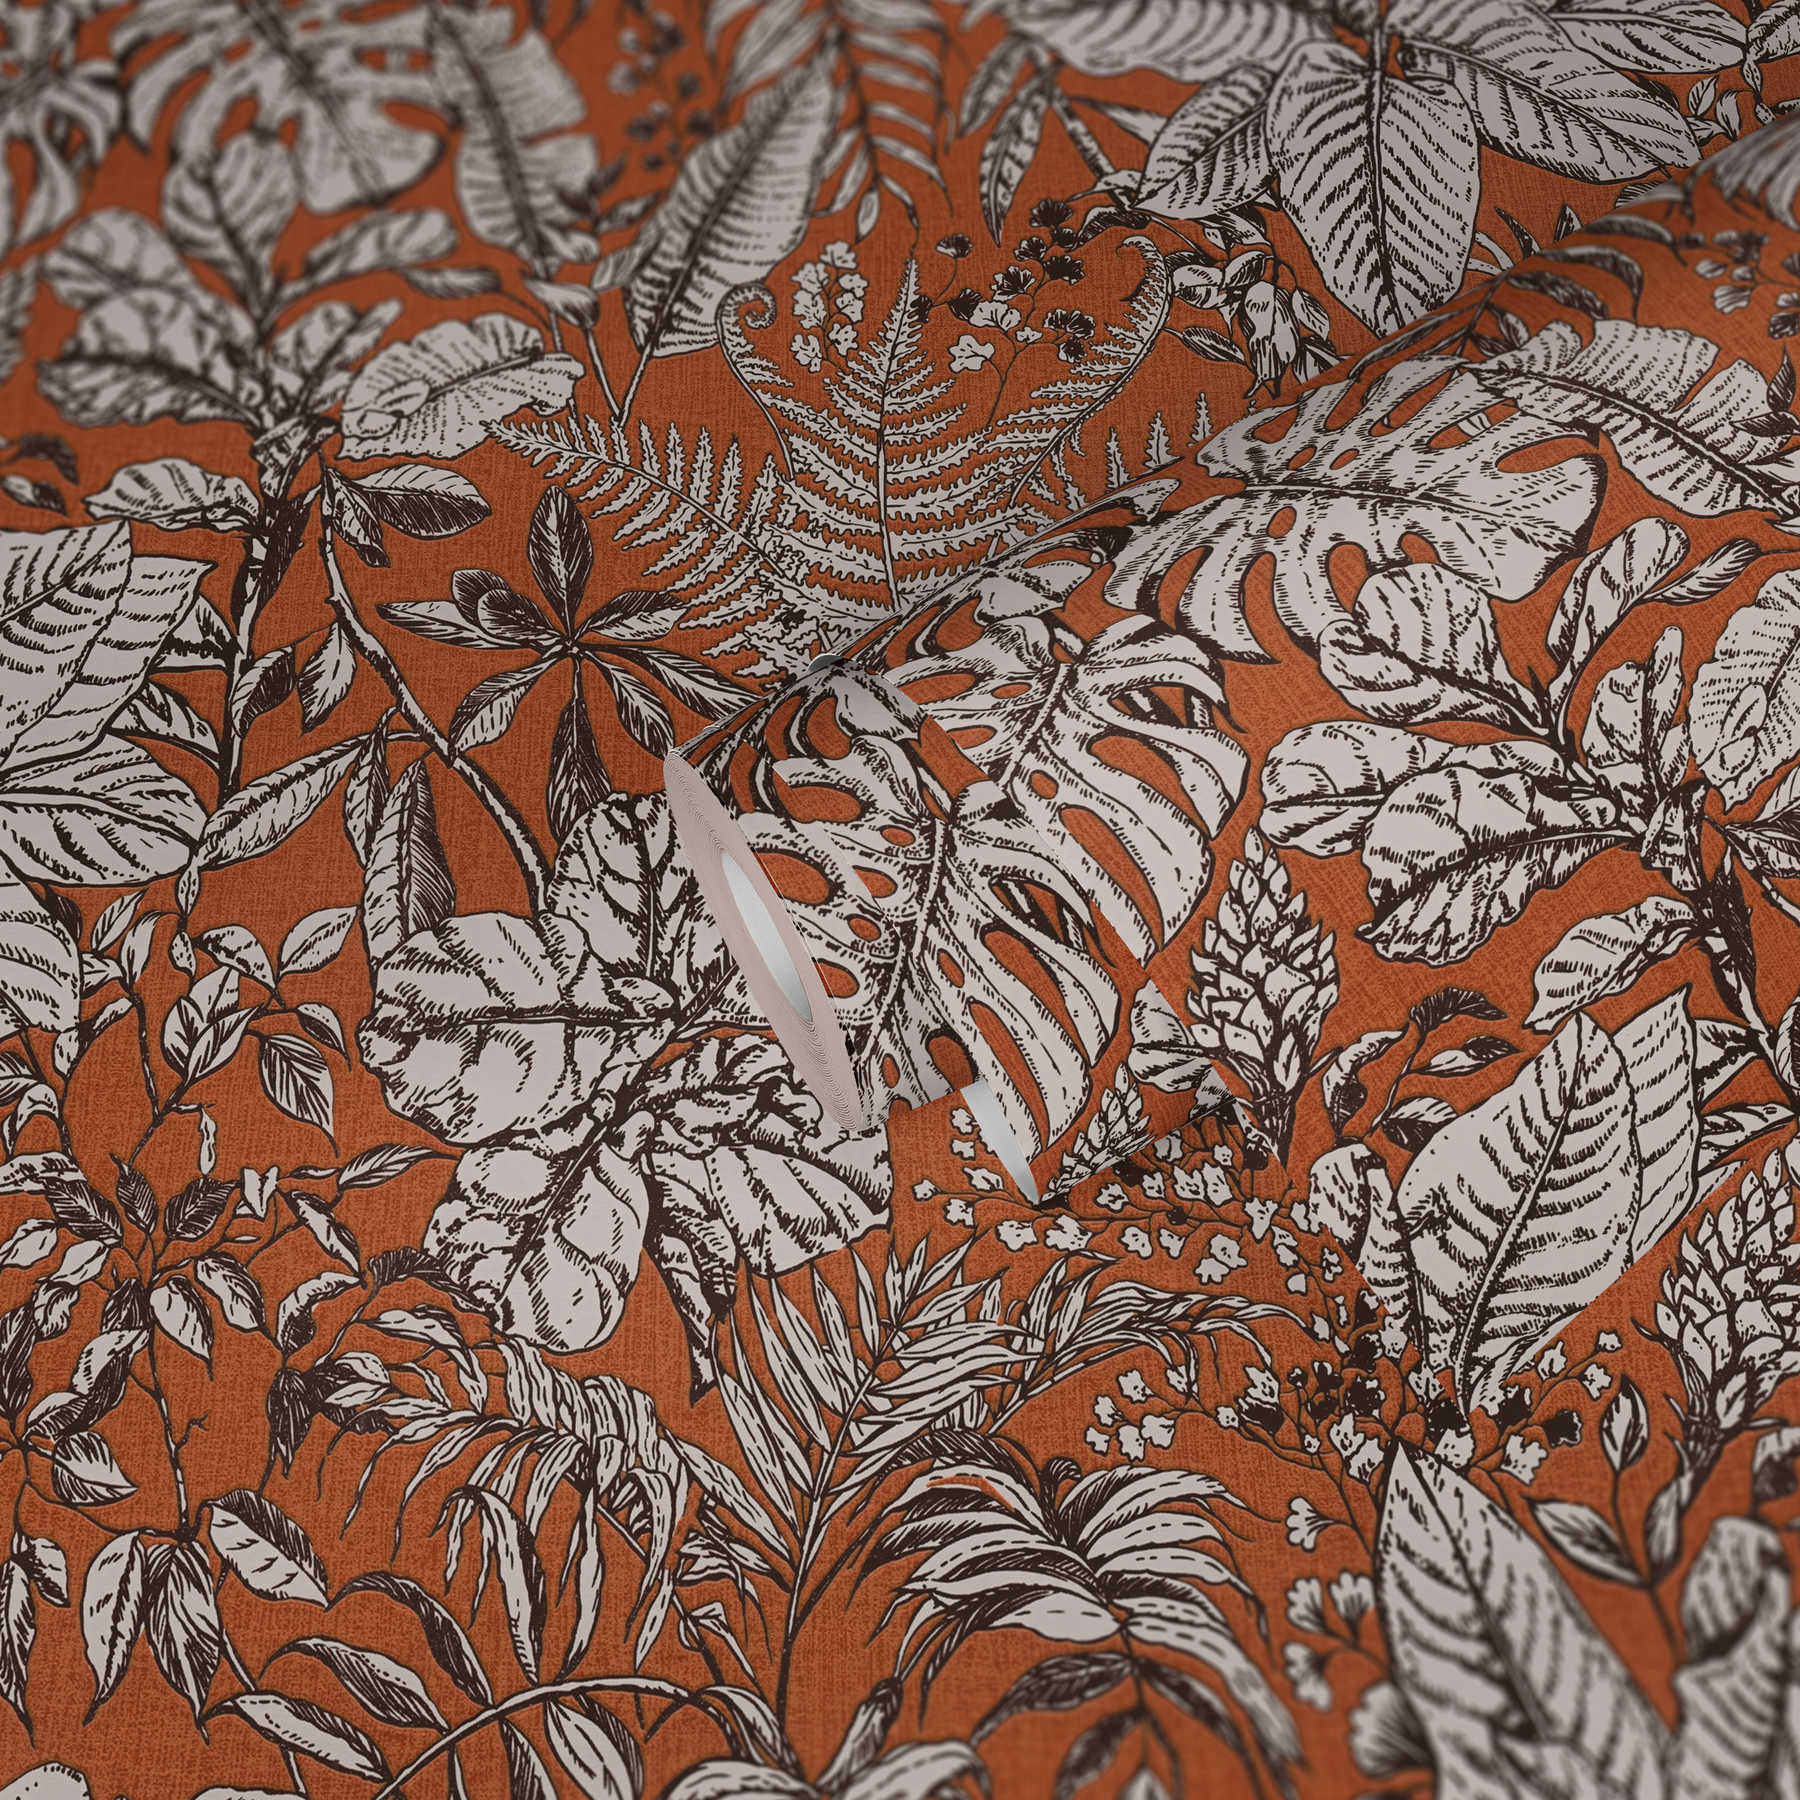             Pattern wallpaper jungle leaves, monstera & ferns - orange, white, brown
        